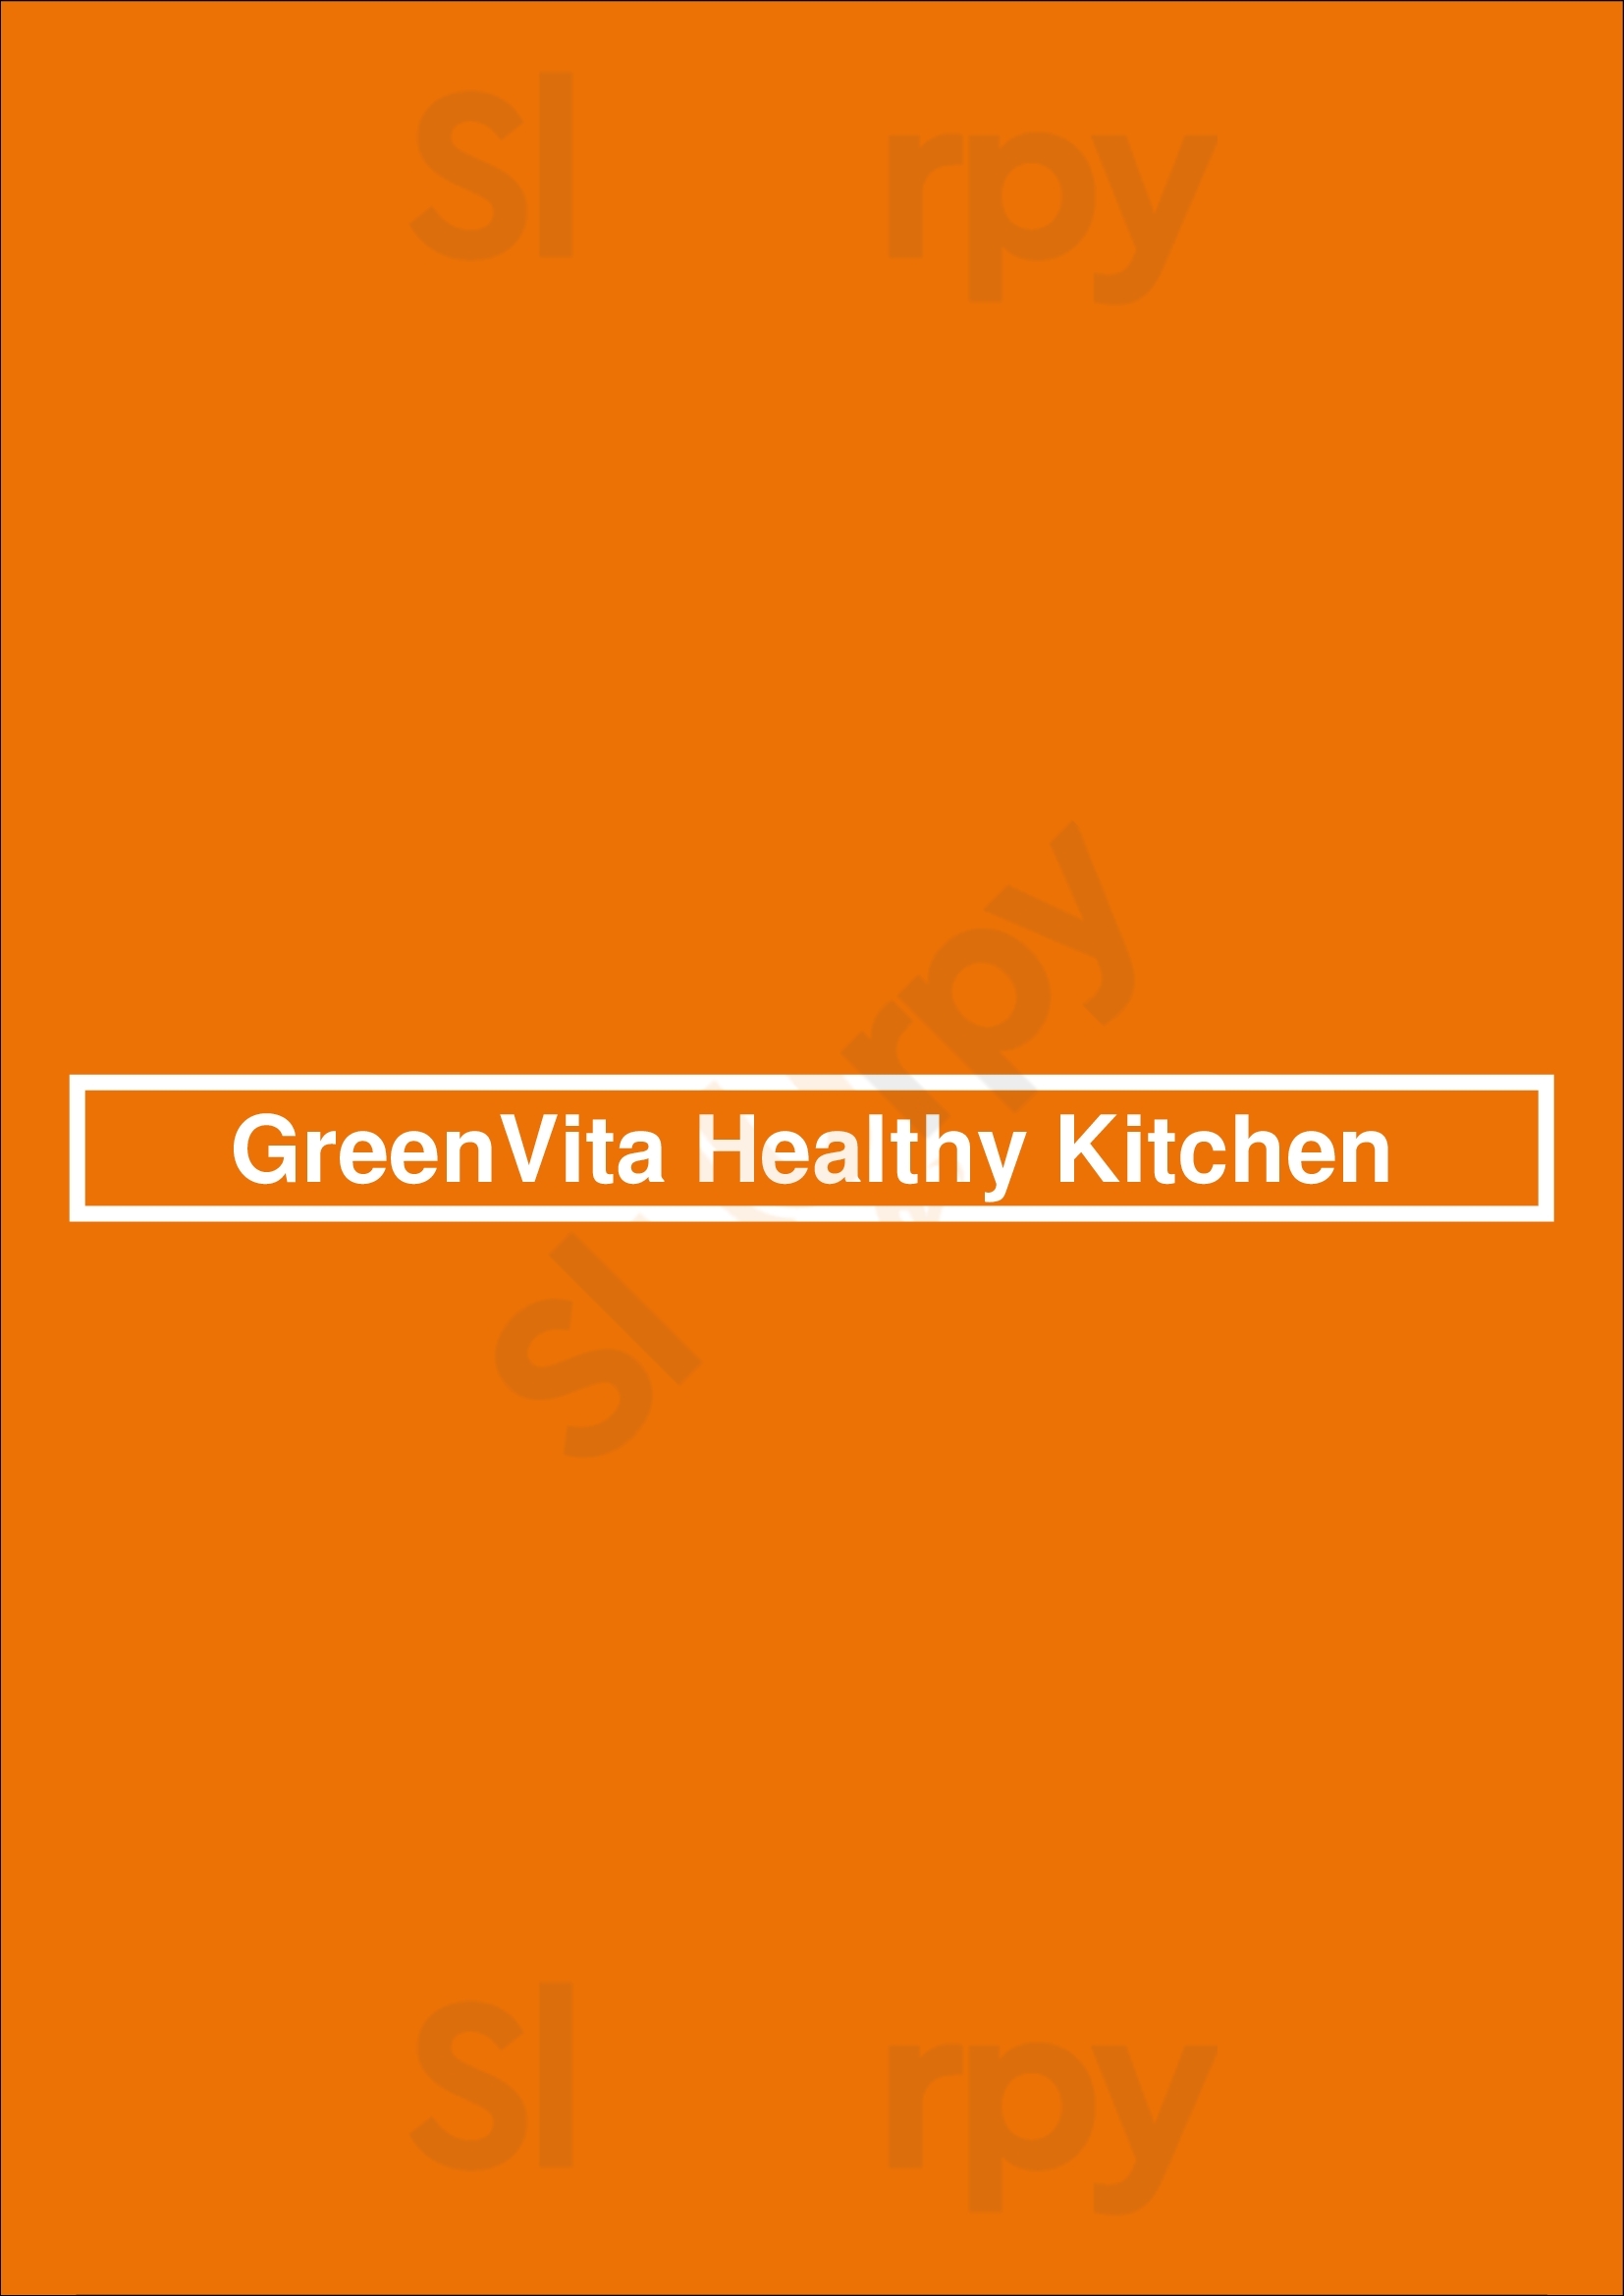 Greenvita Healthy Kitchen Barcelona Menu - 1